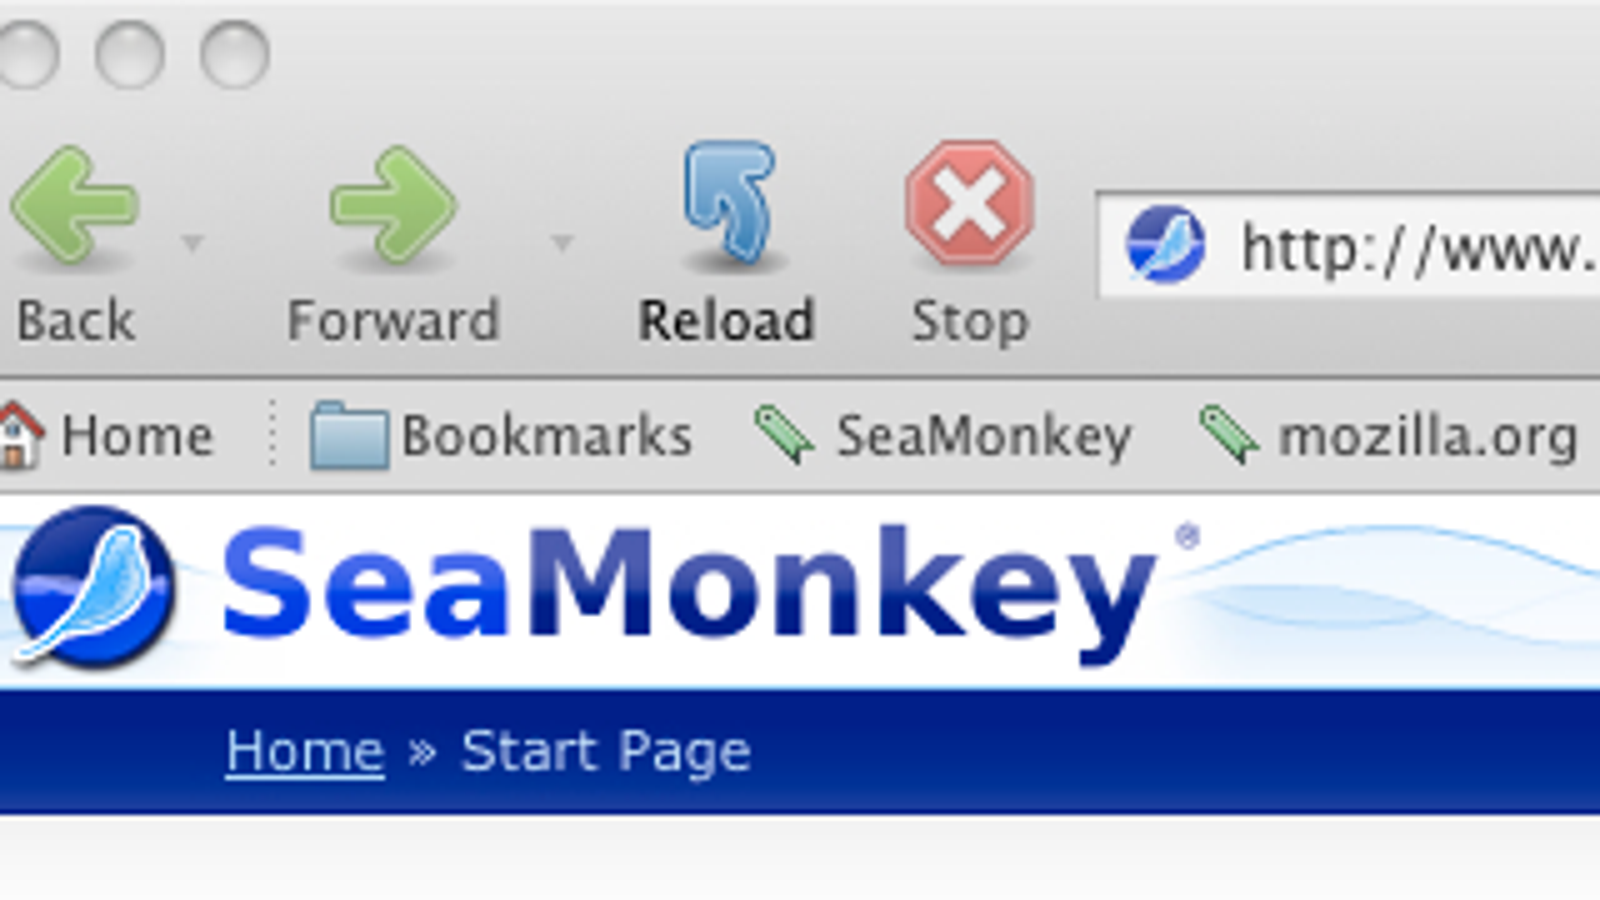 instal the new version for ipod Mozilla SeaMonkey 2.53.17